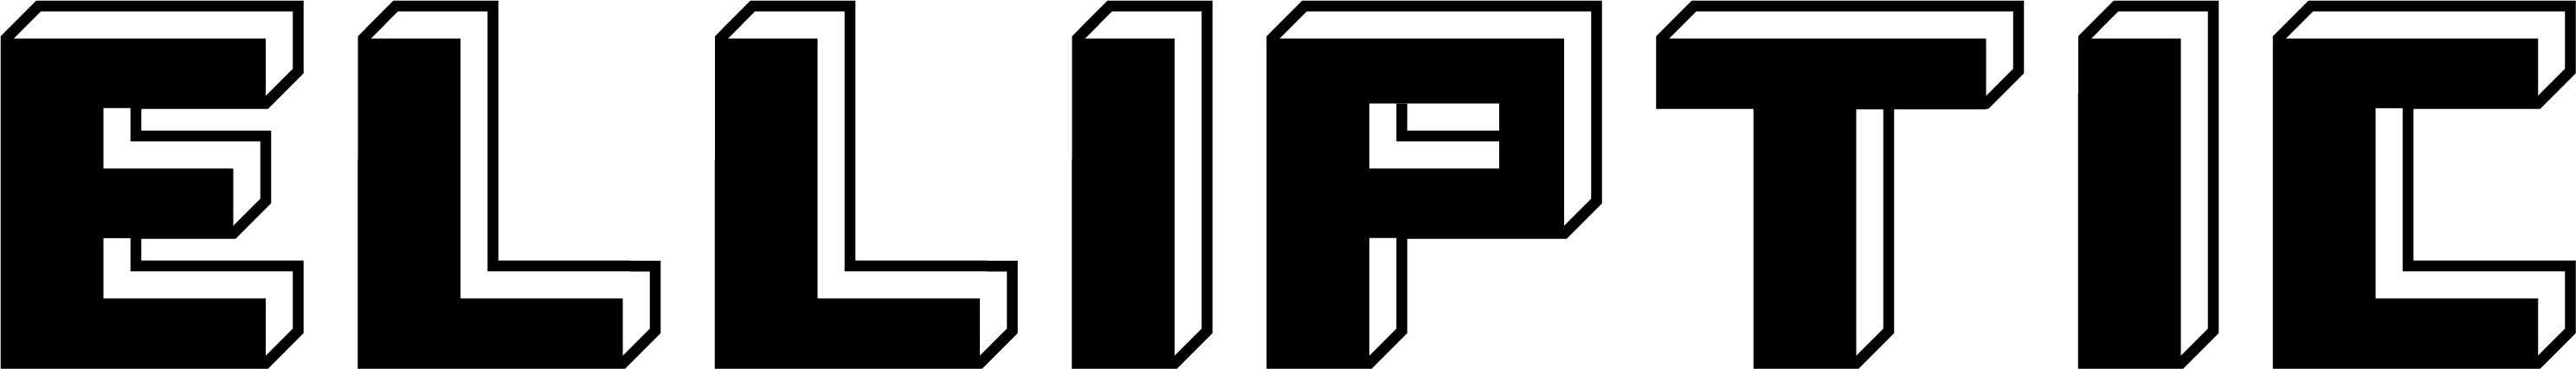 Elliptic logo